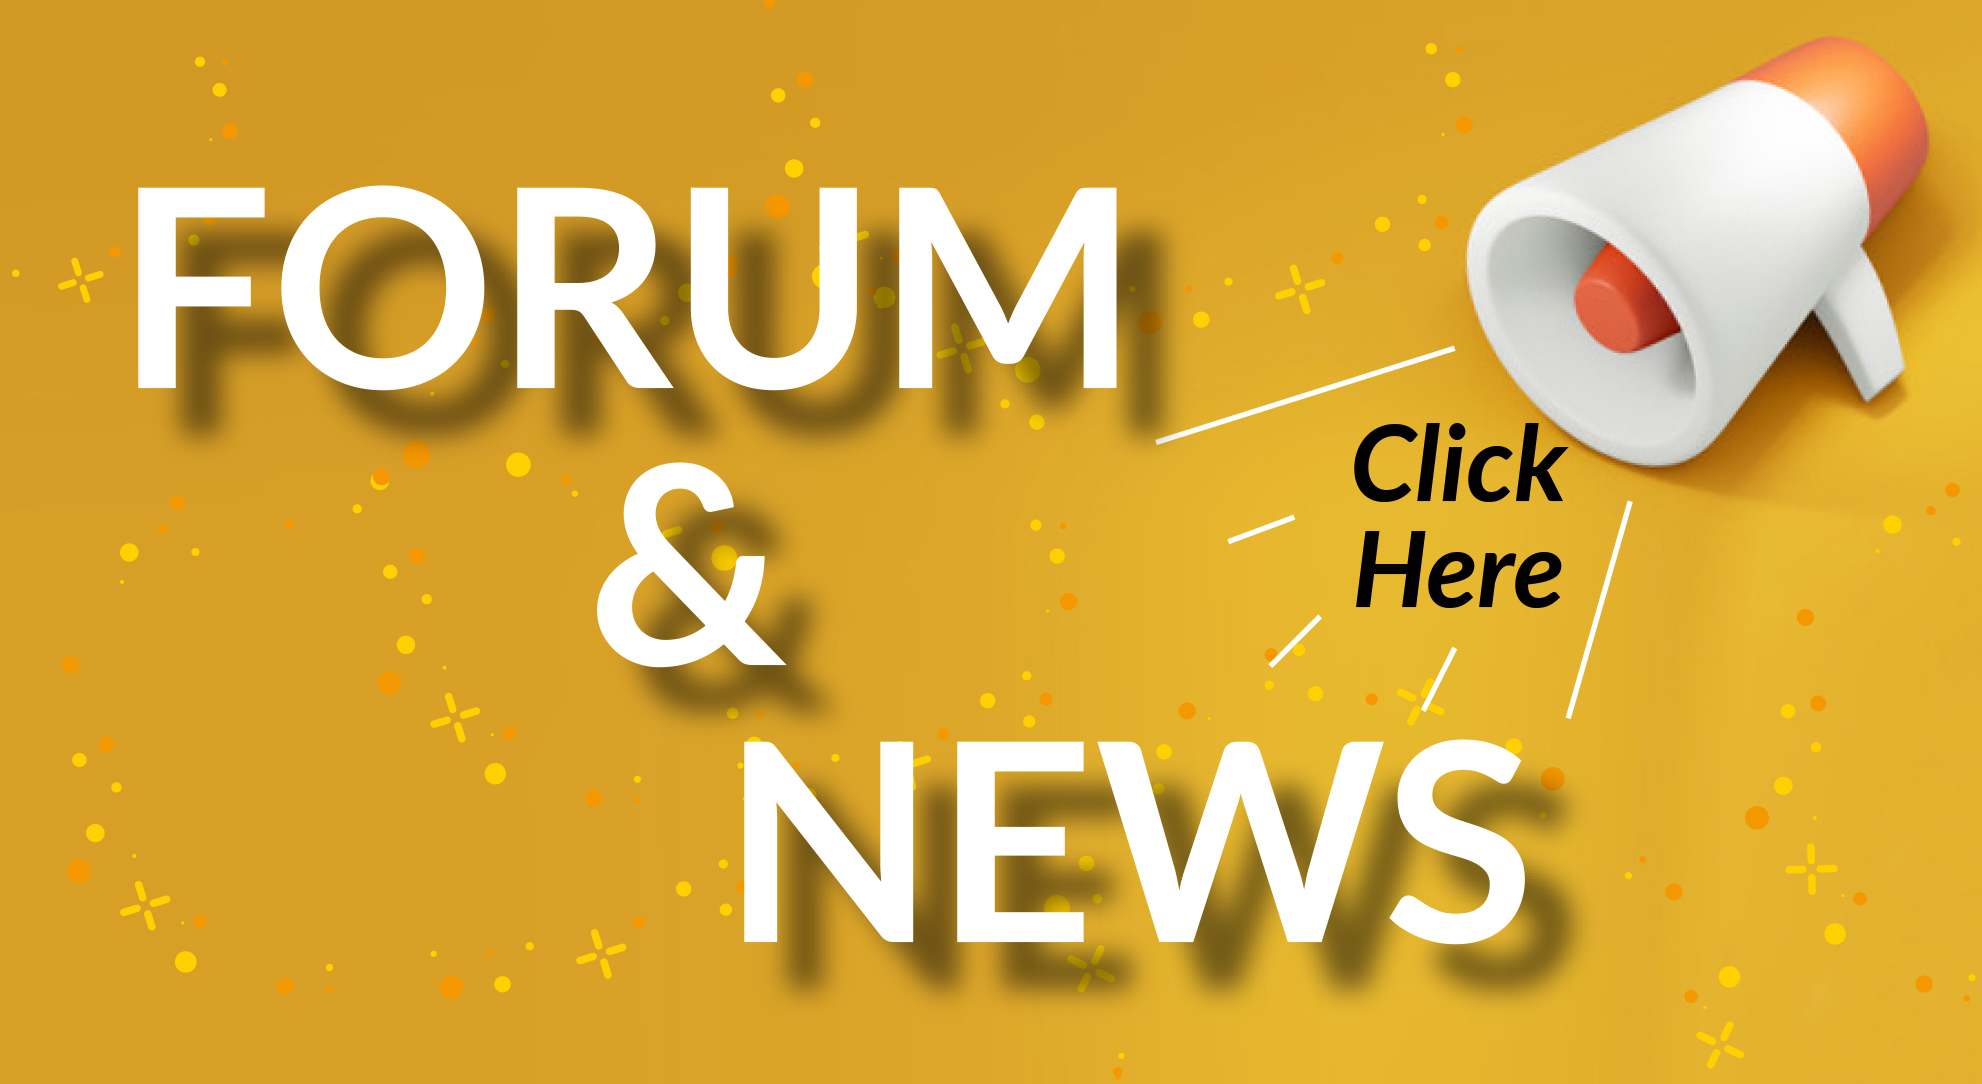 Forum & News